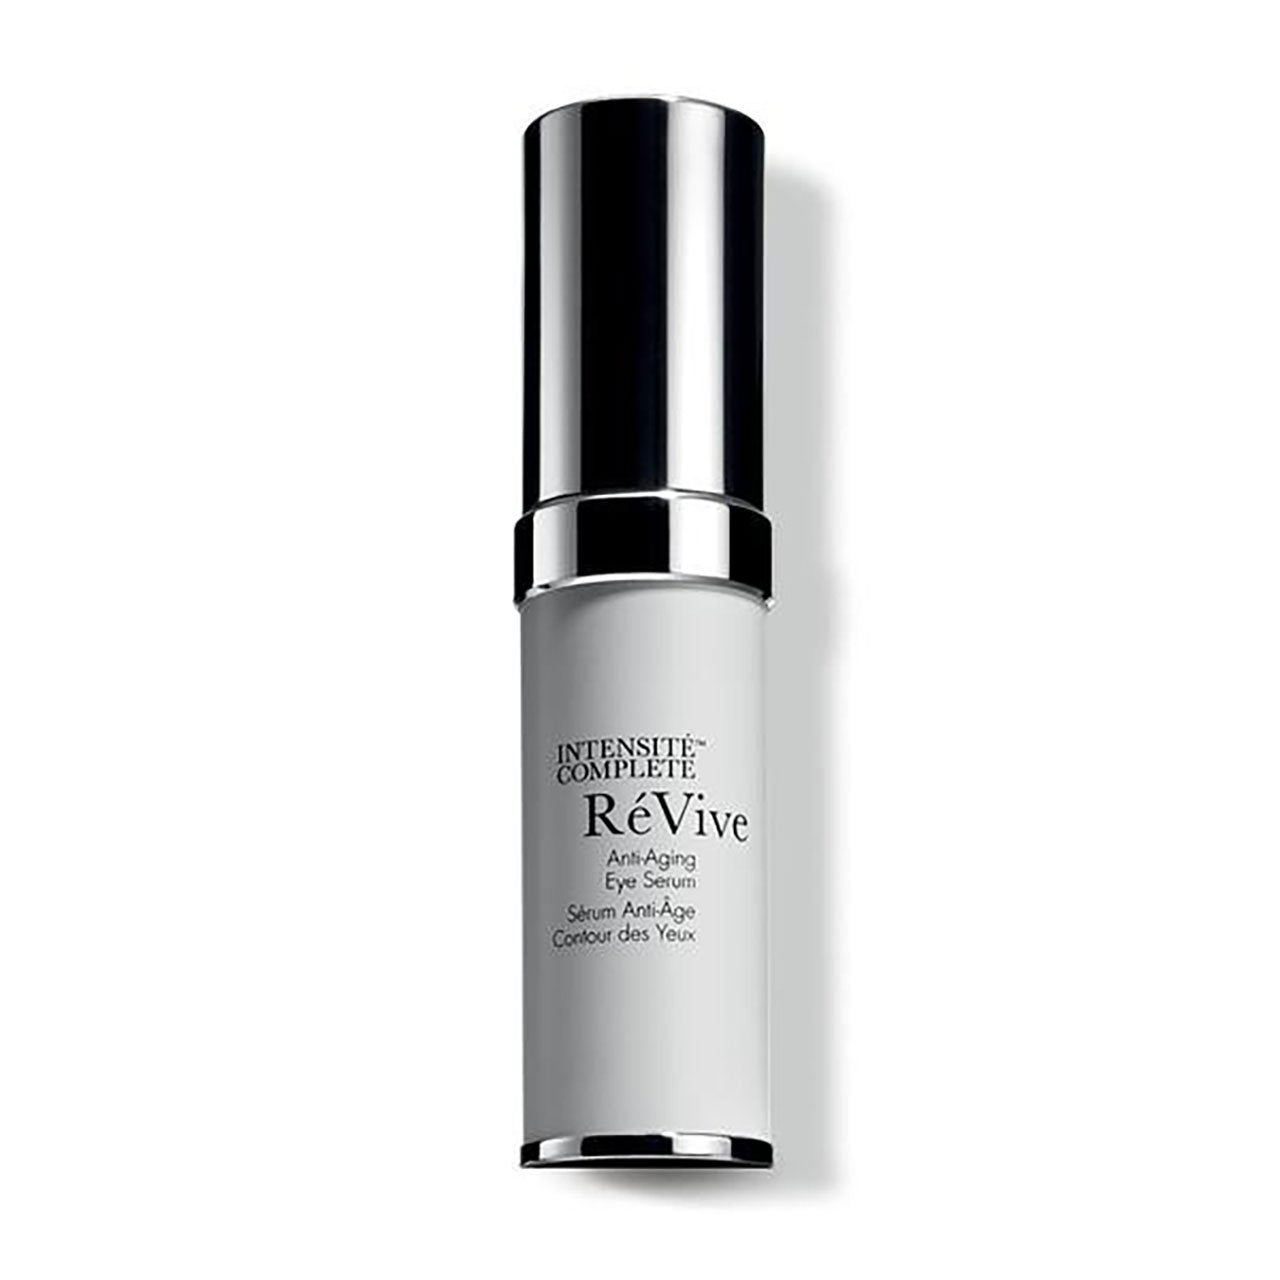 REVIVE - Intensite Complete Anti-Aging Eye Serum - 0.5